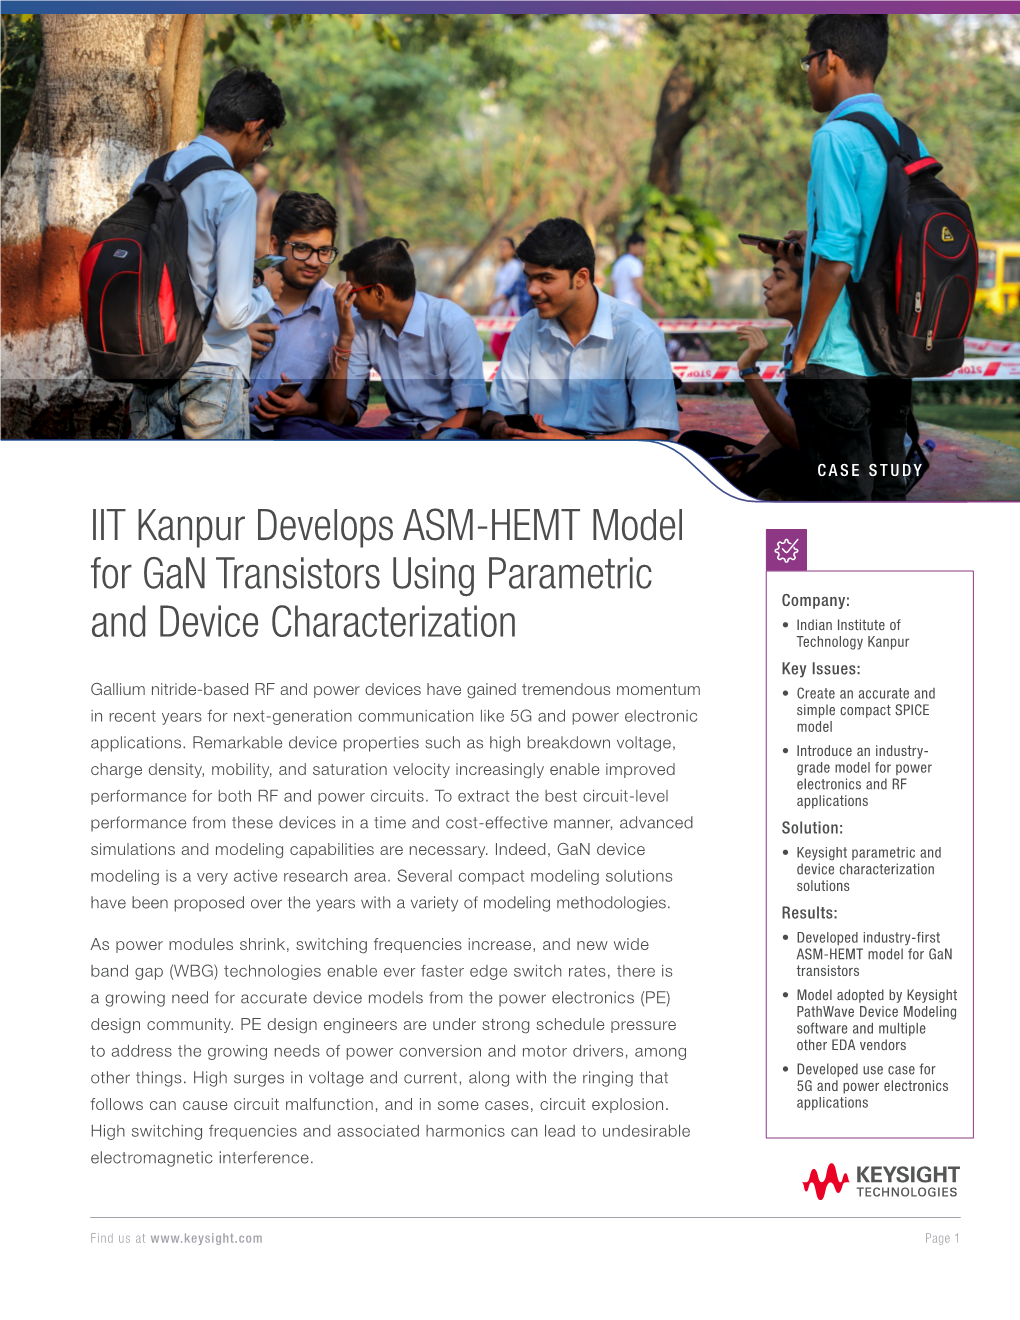 IIT Kanpur Develops ASM-HEMT Model for Gan Transistors Using